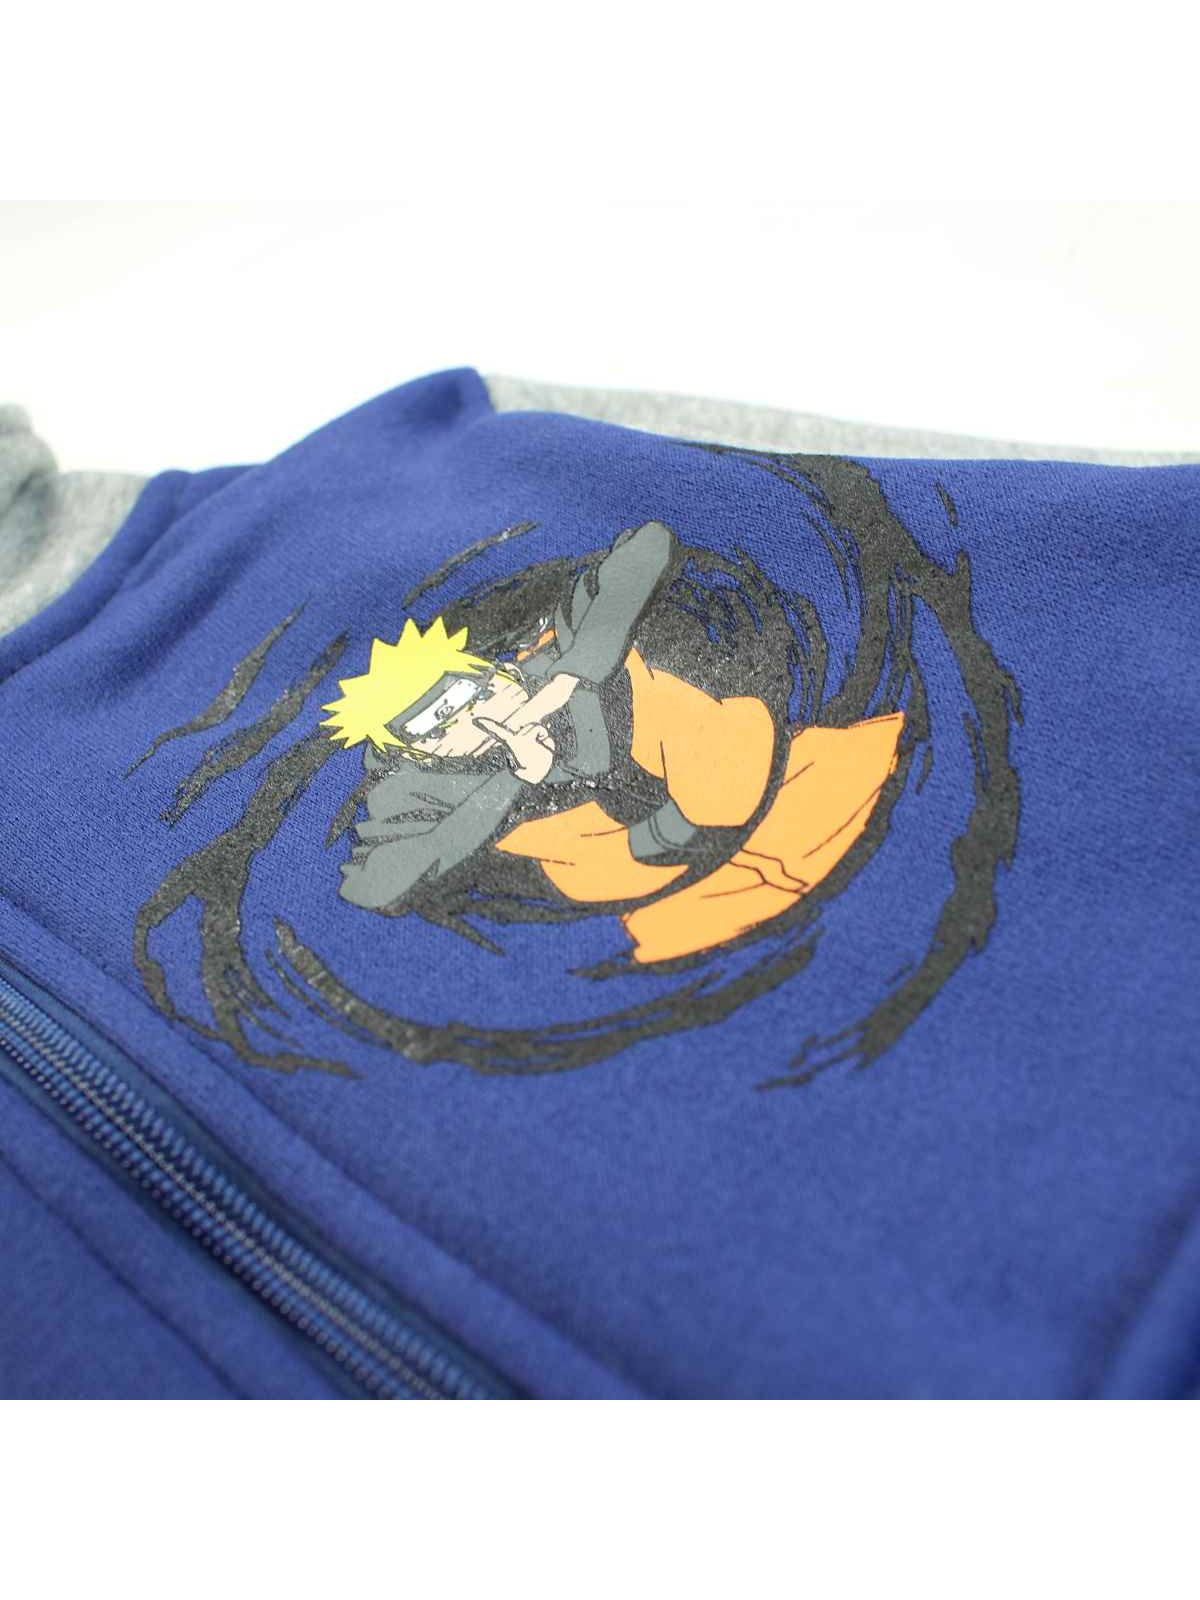 Naruto Jacket